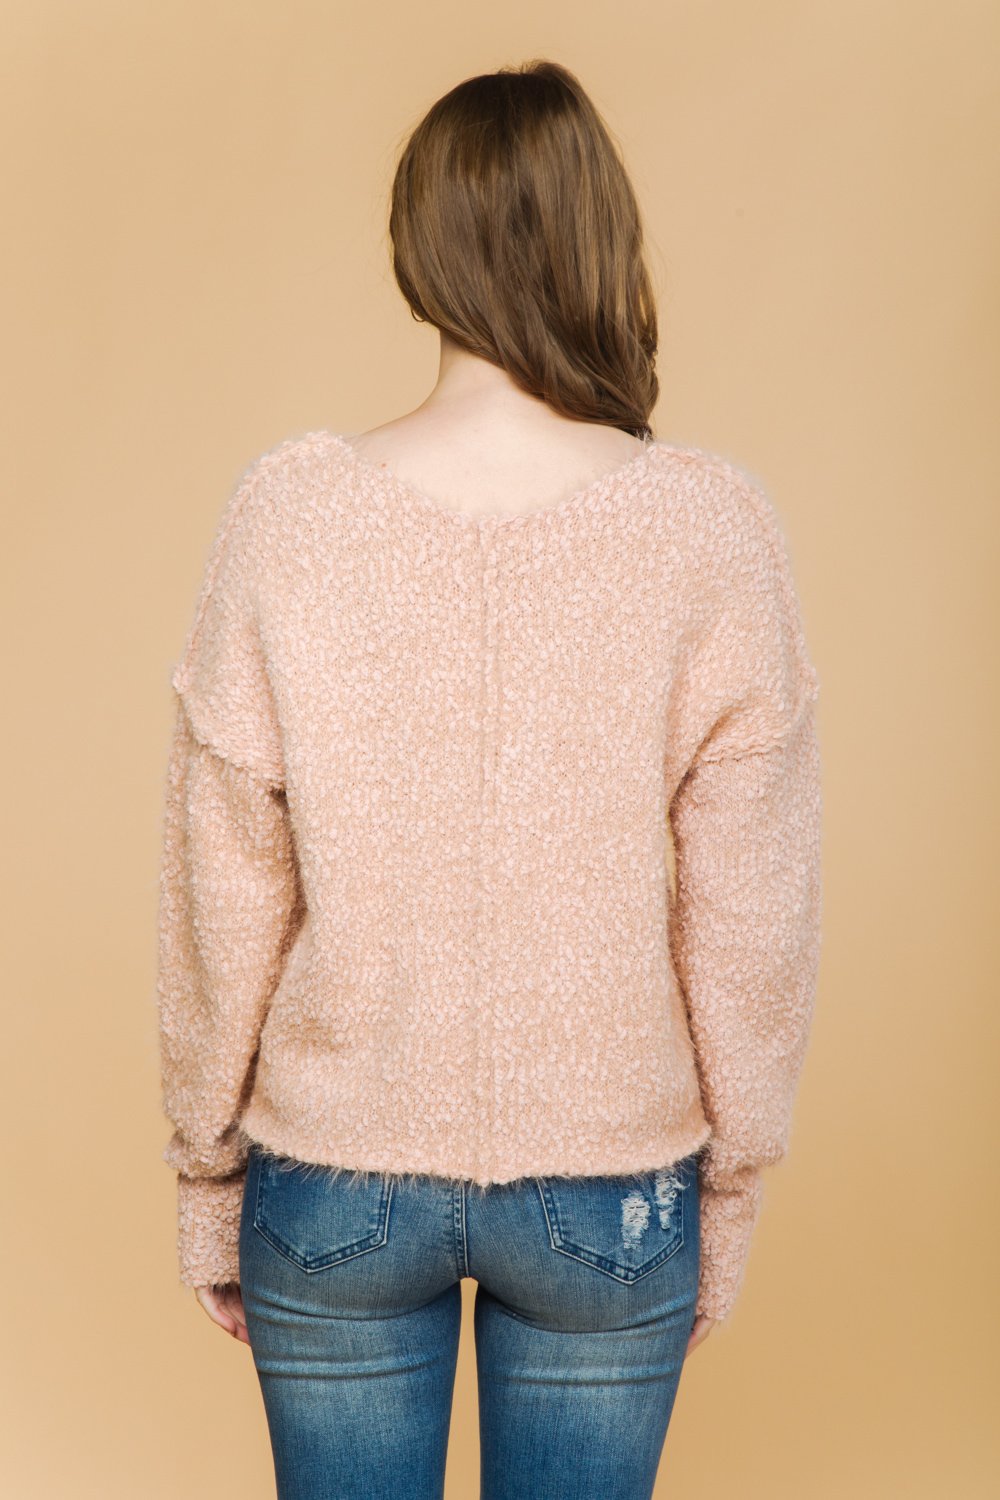 Wildest Dreams Sweater - Blush